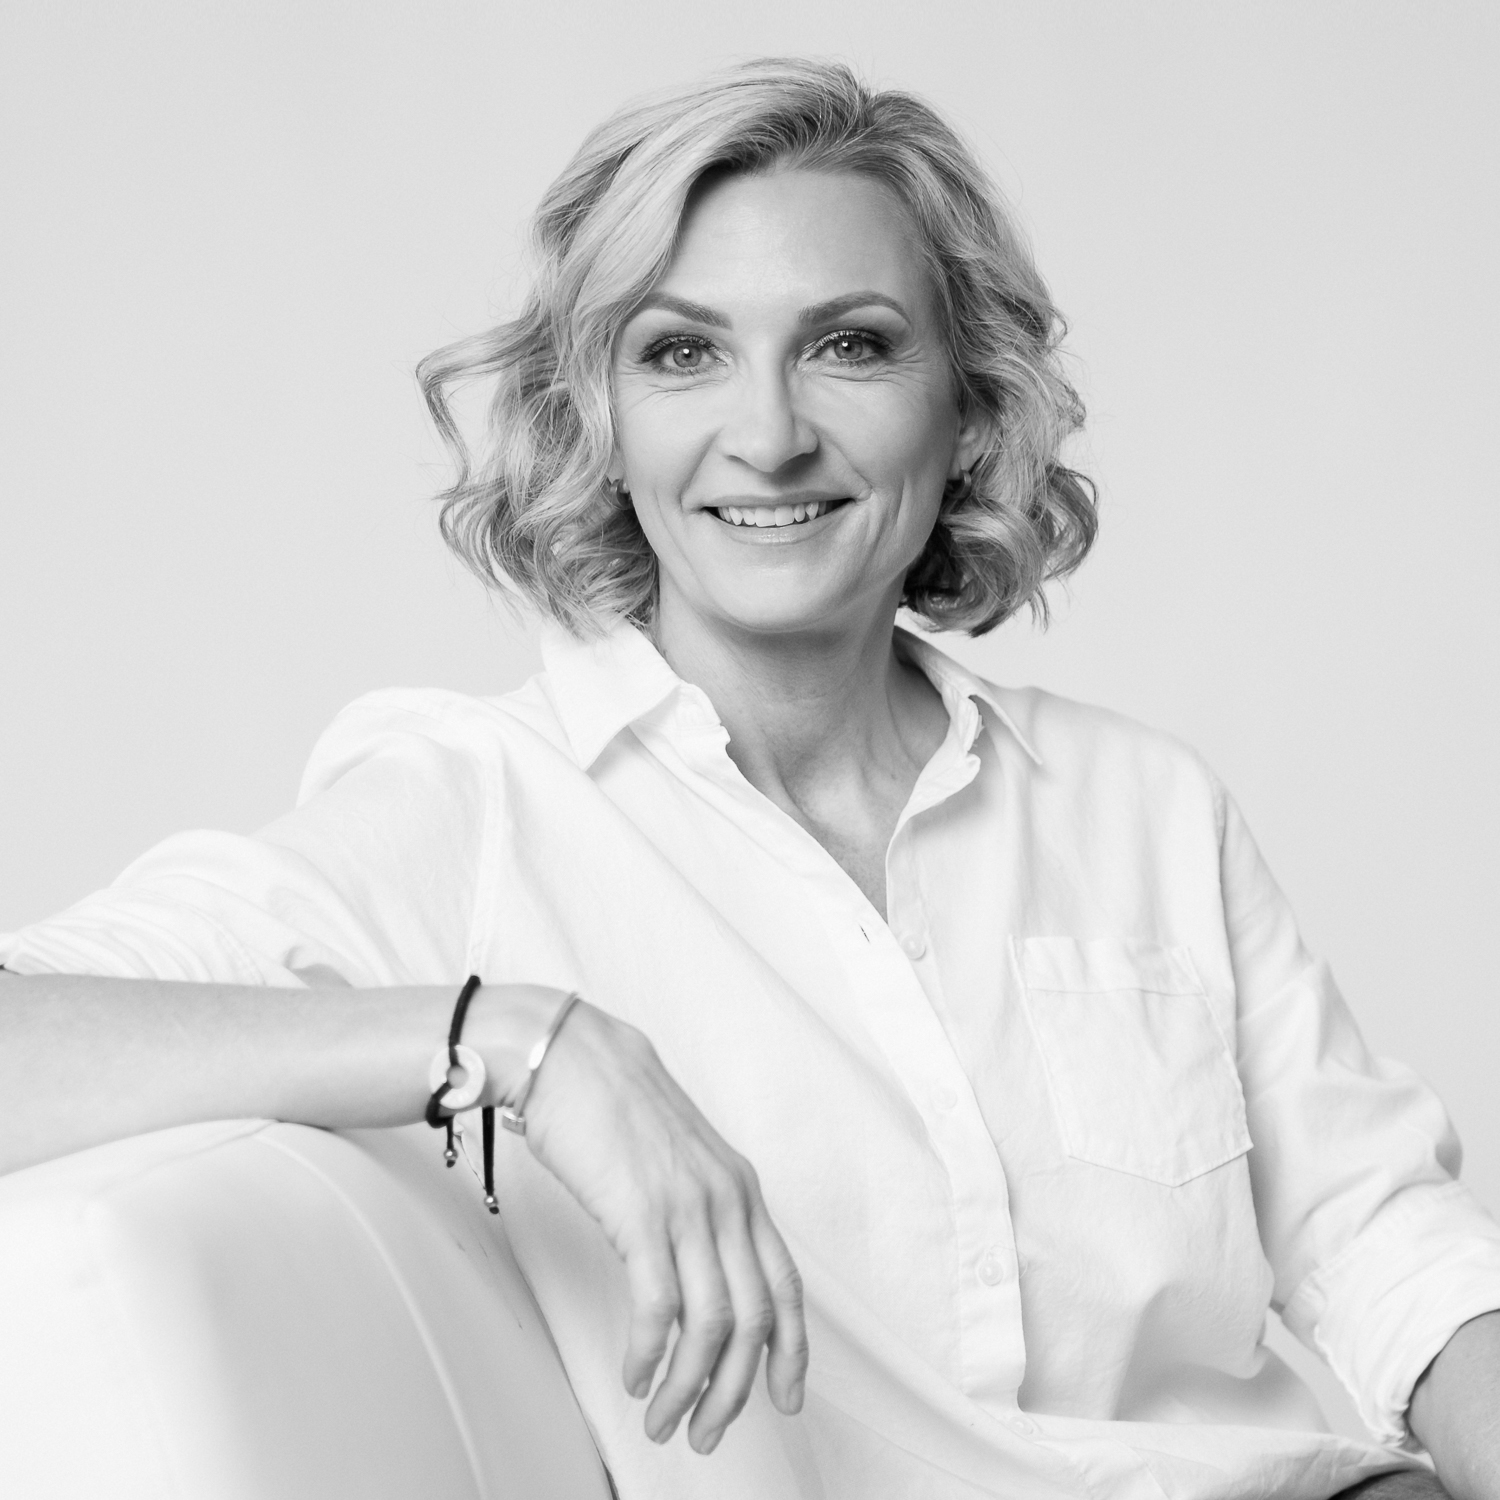 About Tina Erdmann, Portrait Photographer, Mentor, Educator, Coach, Designer, Content Management, Brand Agency